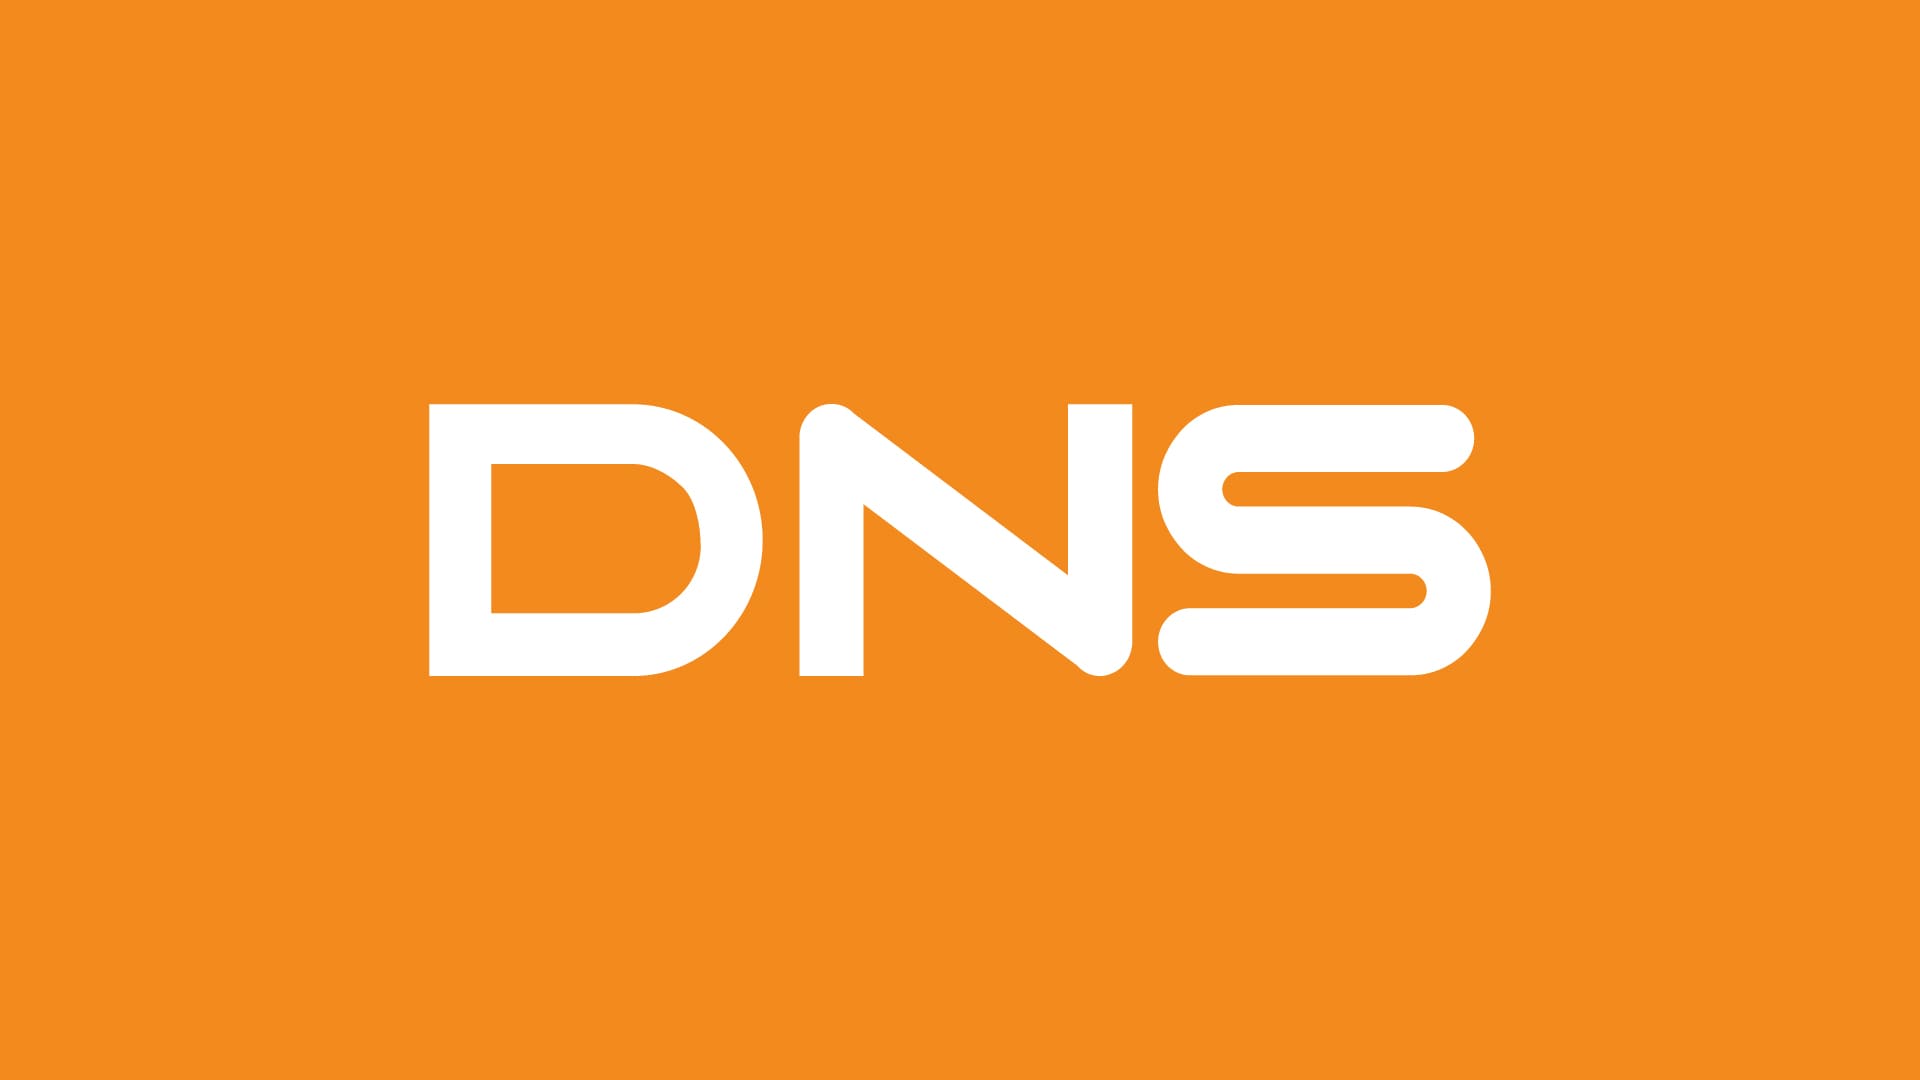 Сайт интернет магазина днс москва интернет магазин. ДНС. DNS эмблема. ДНСЗ. Логотип магазина ДНС.